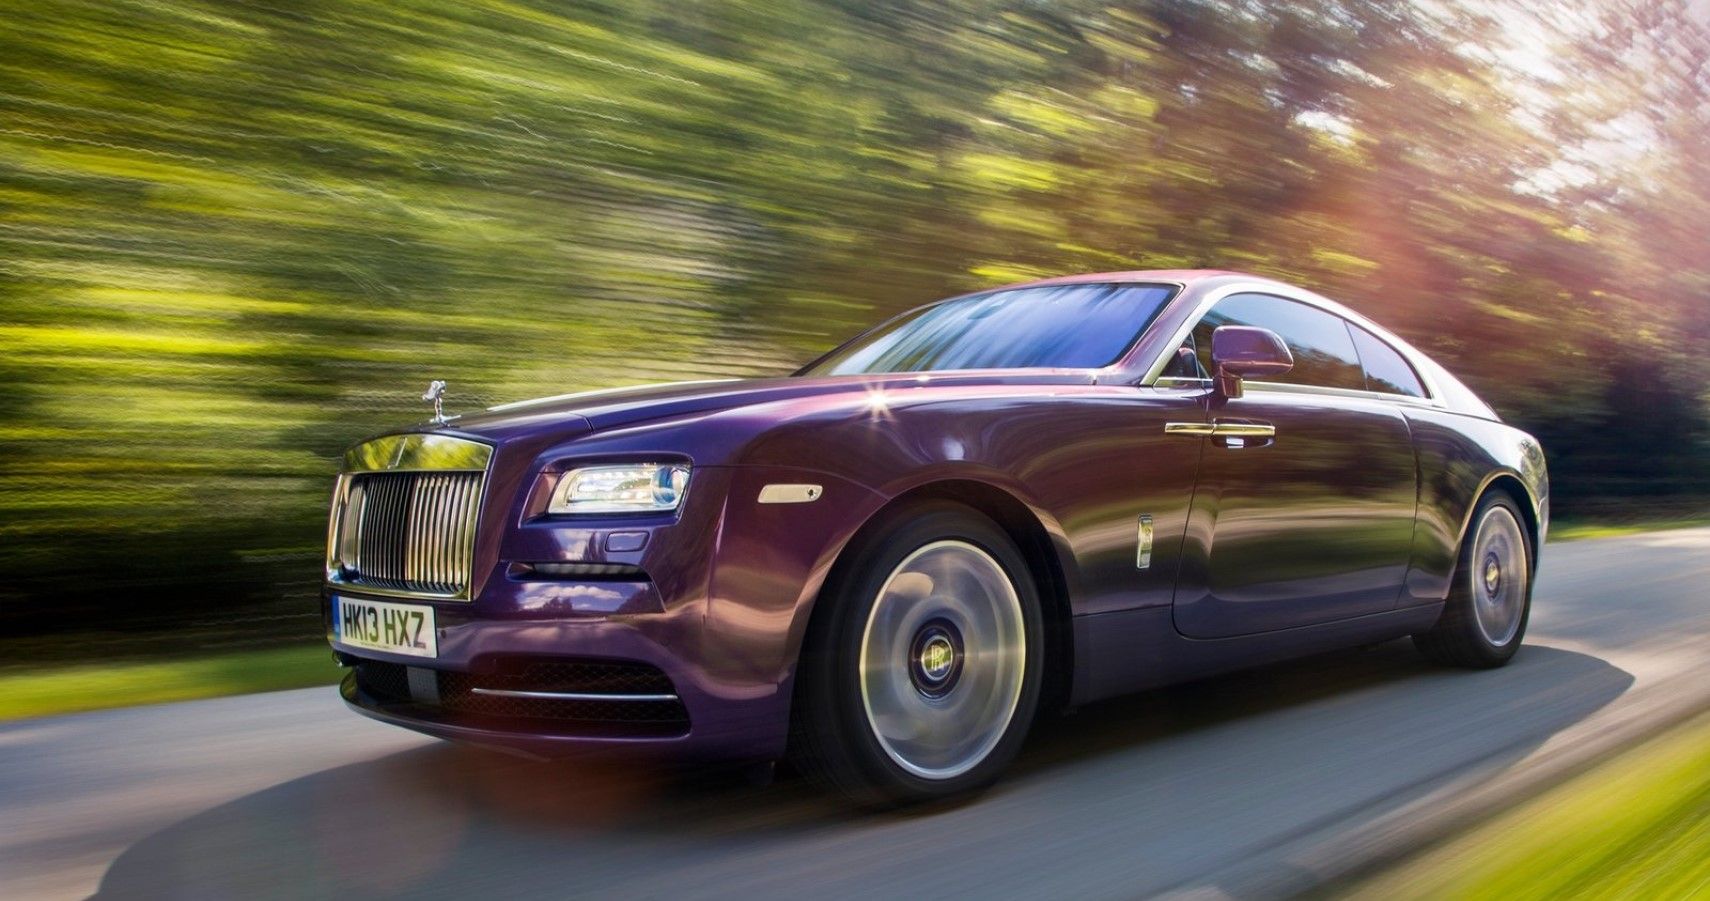 Rolls-Royce Wraith front third quarter hd wallpaper view